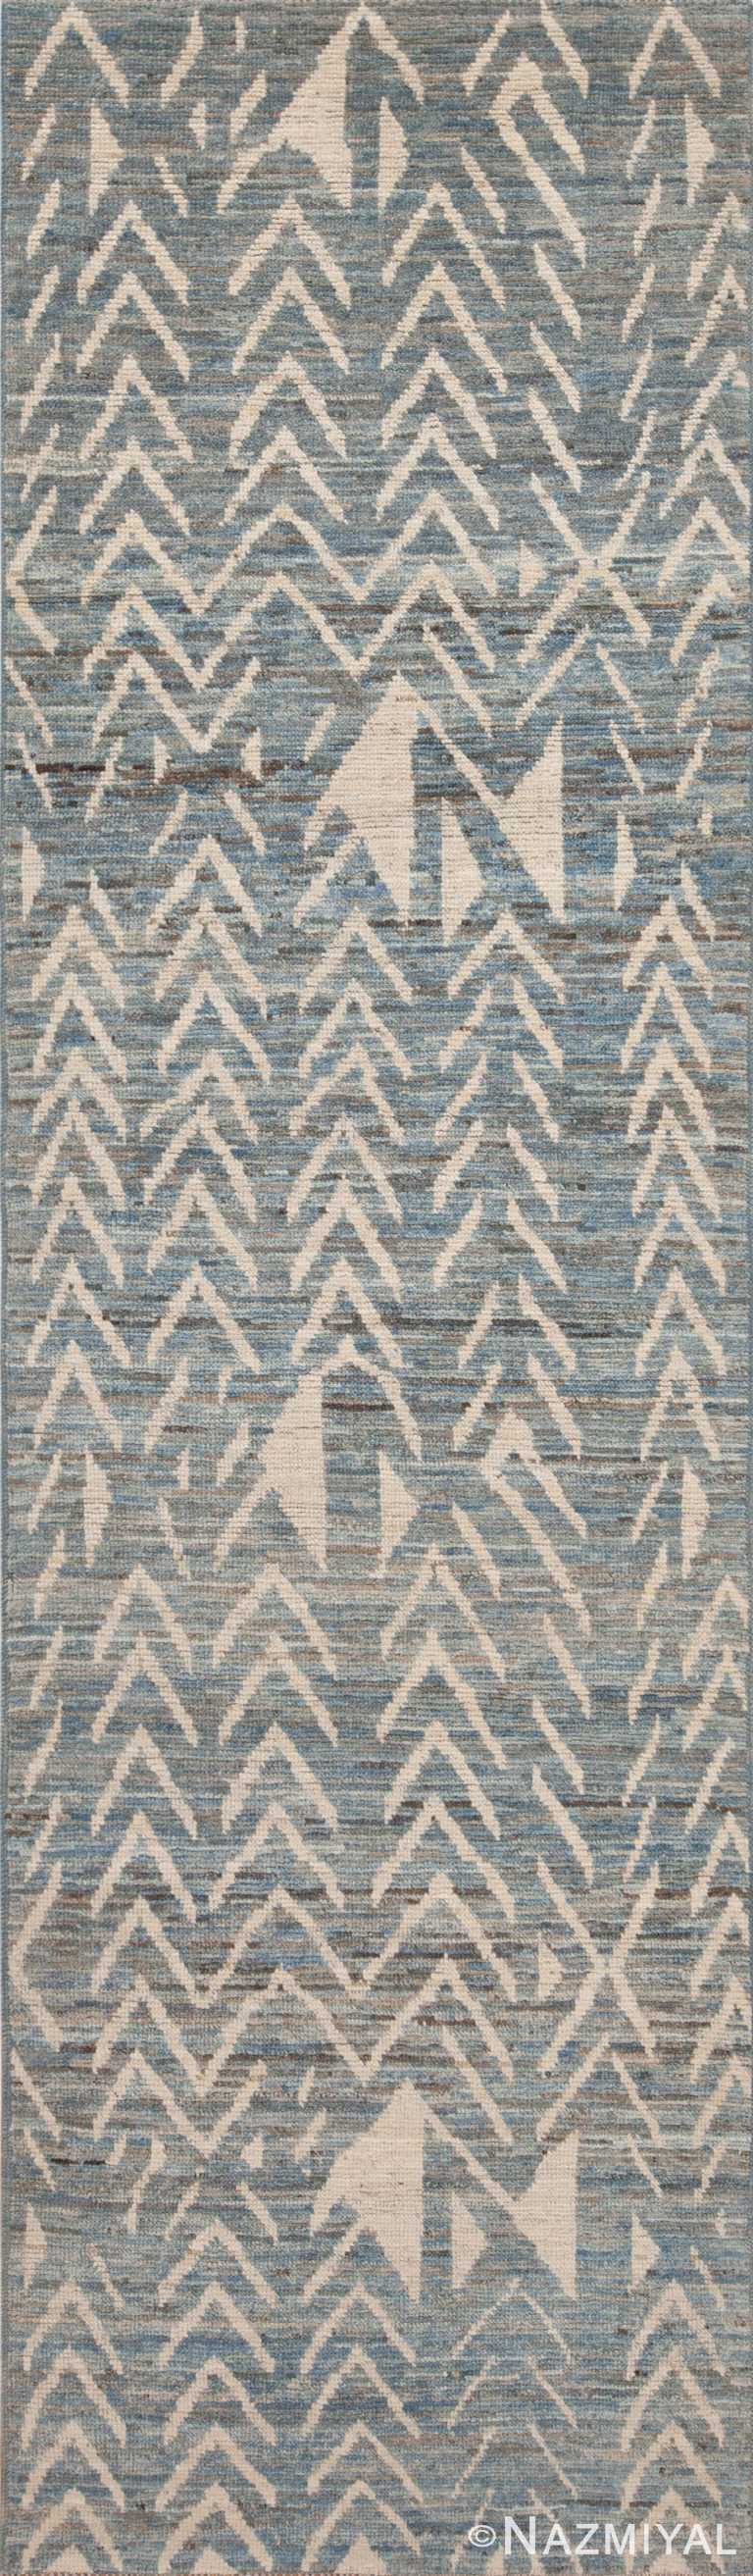 Light Blue Abrash Background and Tribal Geometric Ivory White Pattern Modern Hallway Runner Rug 11153 by Nazmiyal Antique rugs